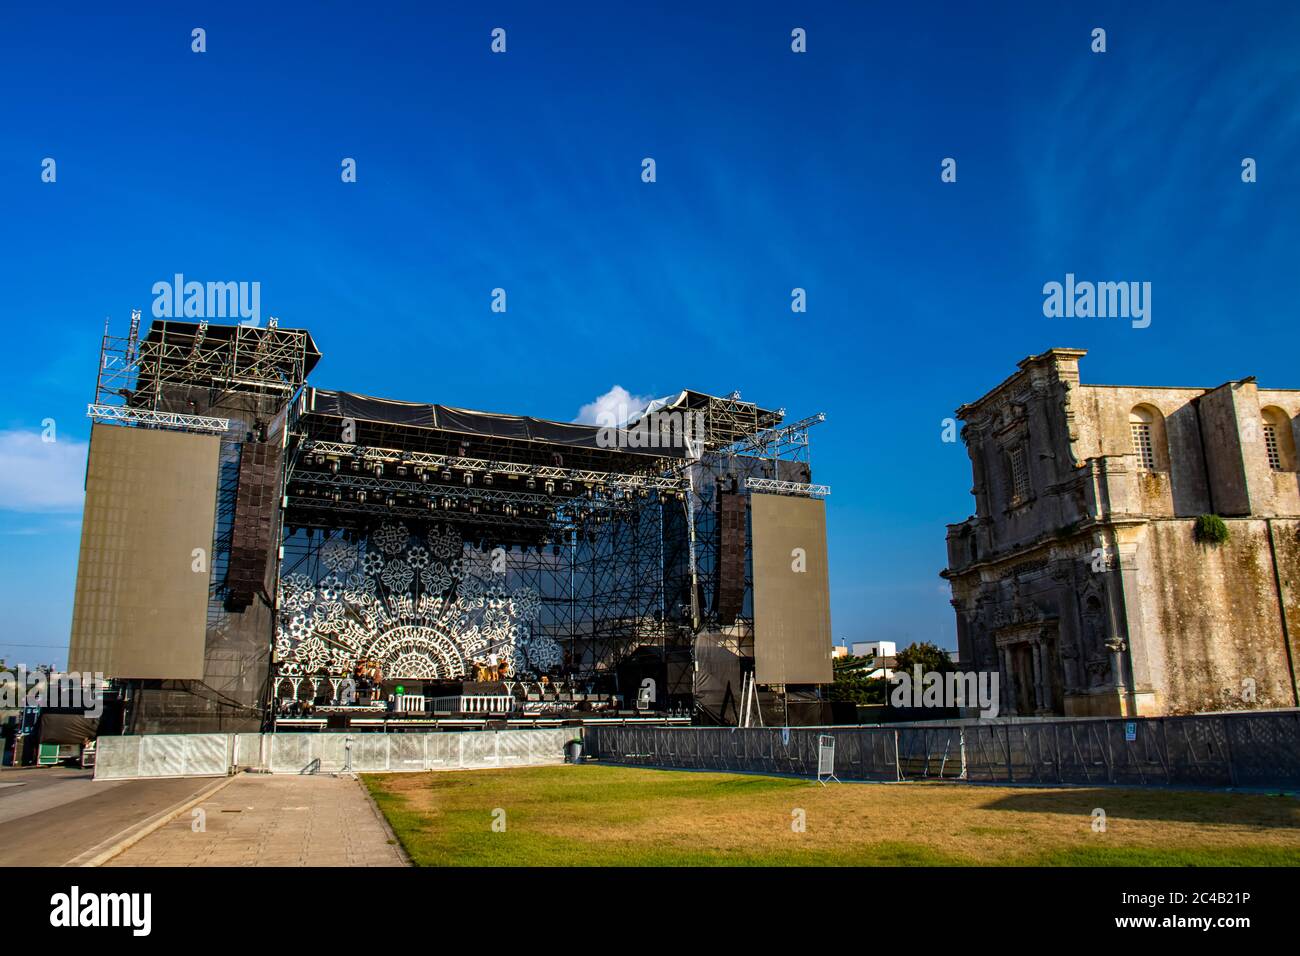 Melpignano, Lecce, Italien - Aufbau der Bühne für das Konzert "Notte della Taranta" in Melpignano, im Salento. Stockfoto